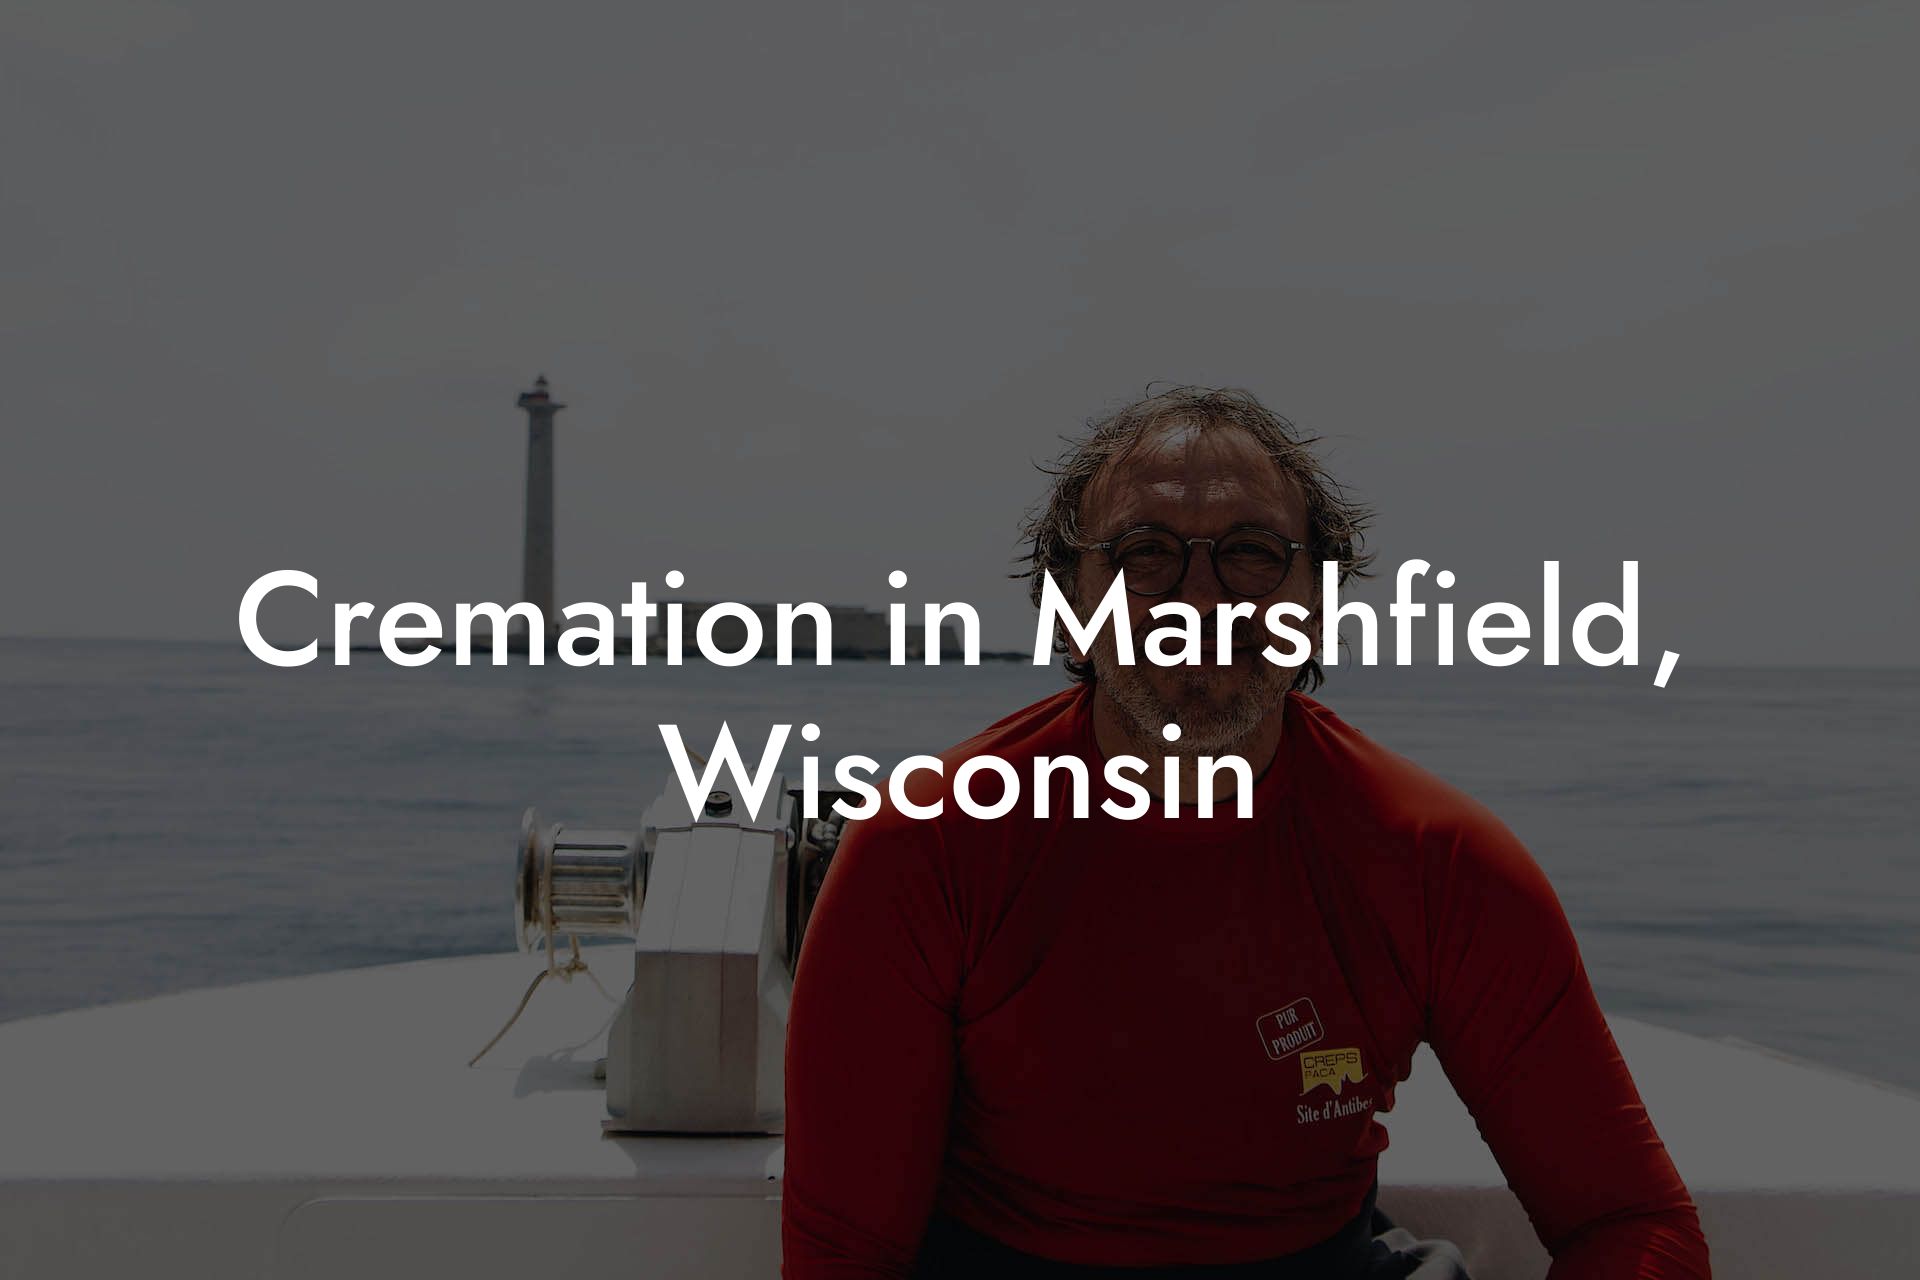 Cremation in Marshfield, Wisconsin